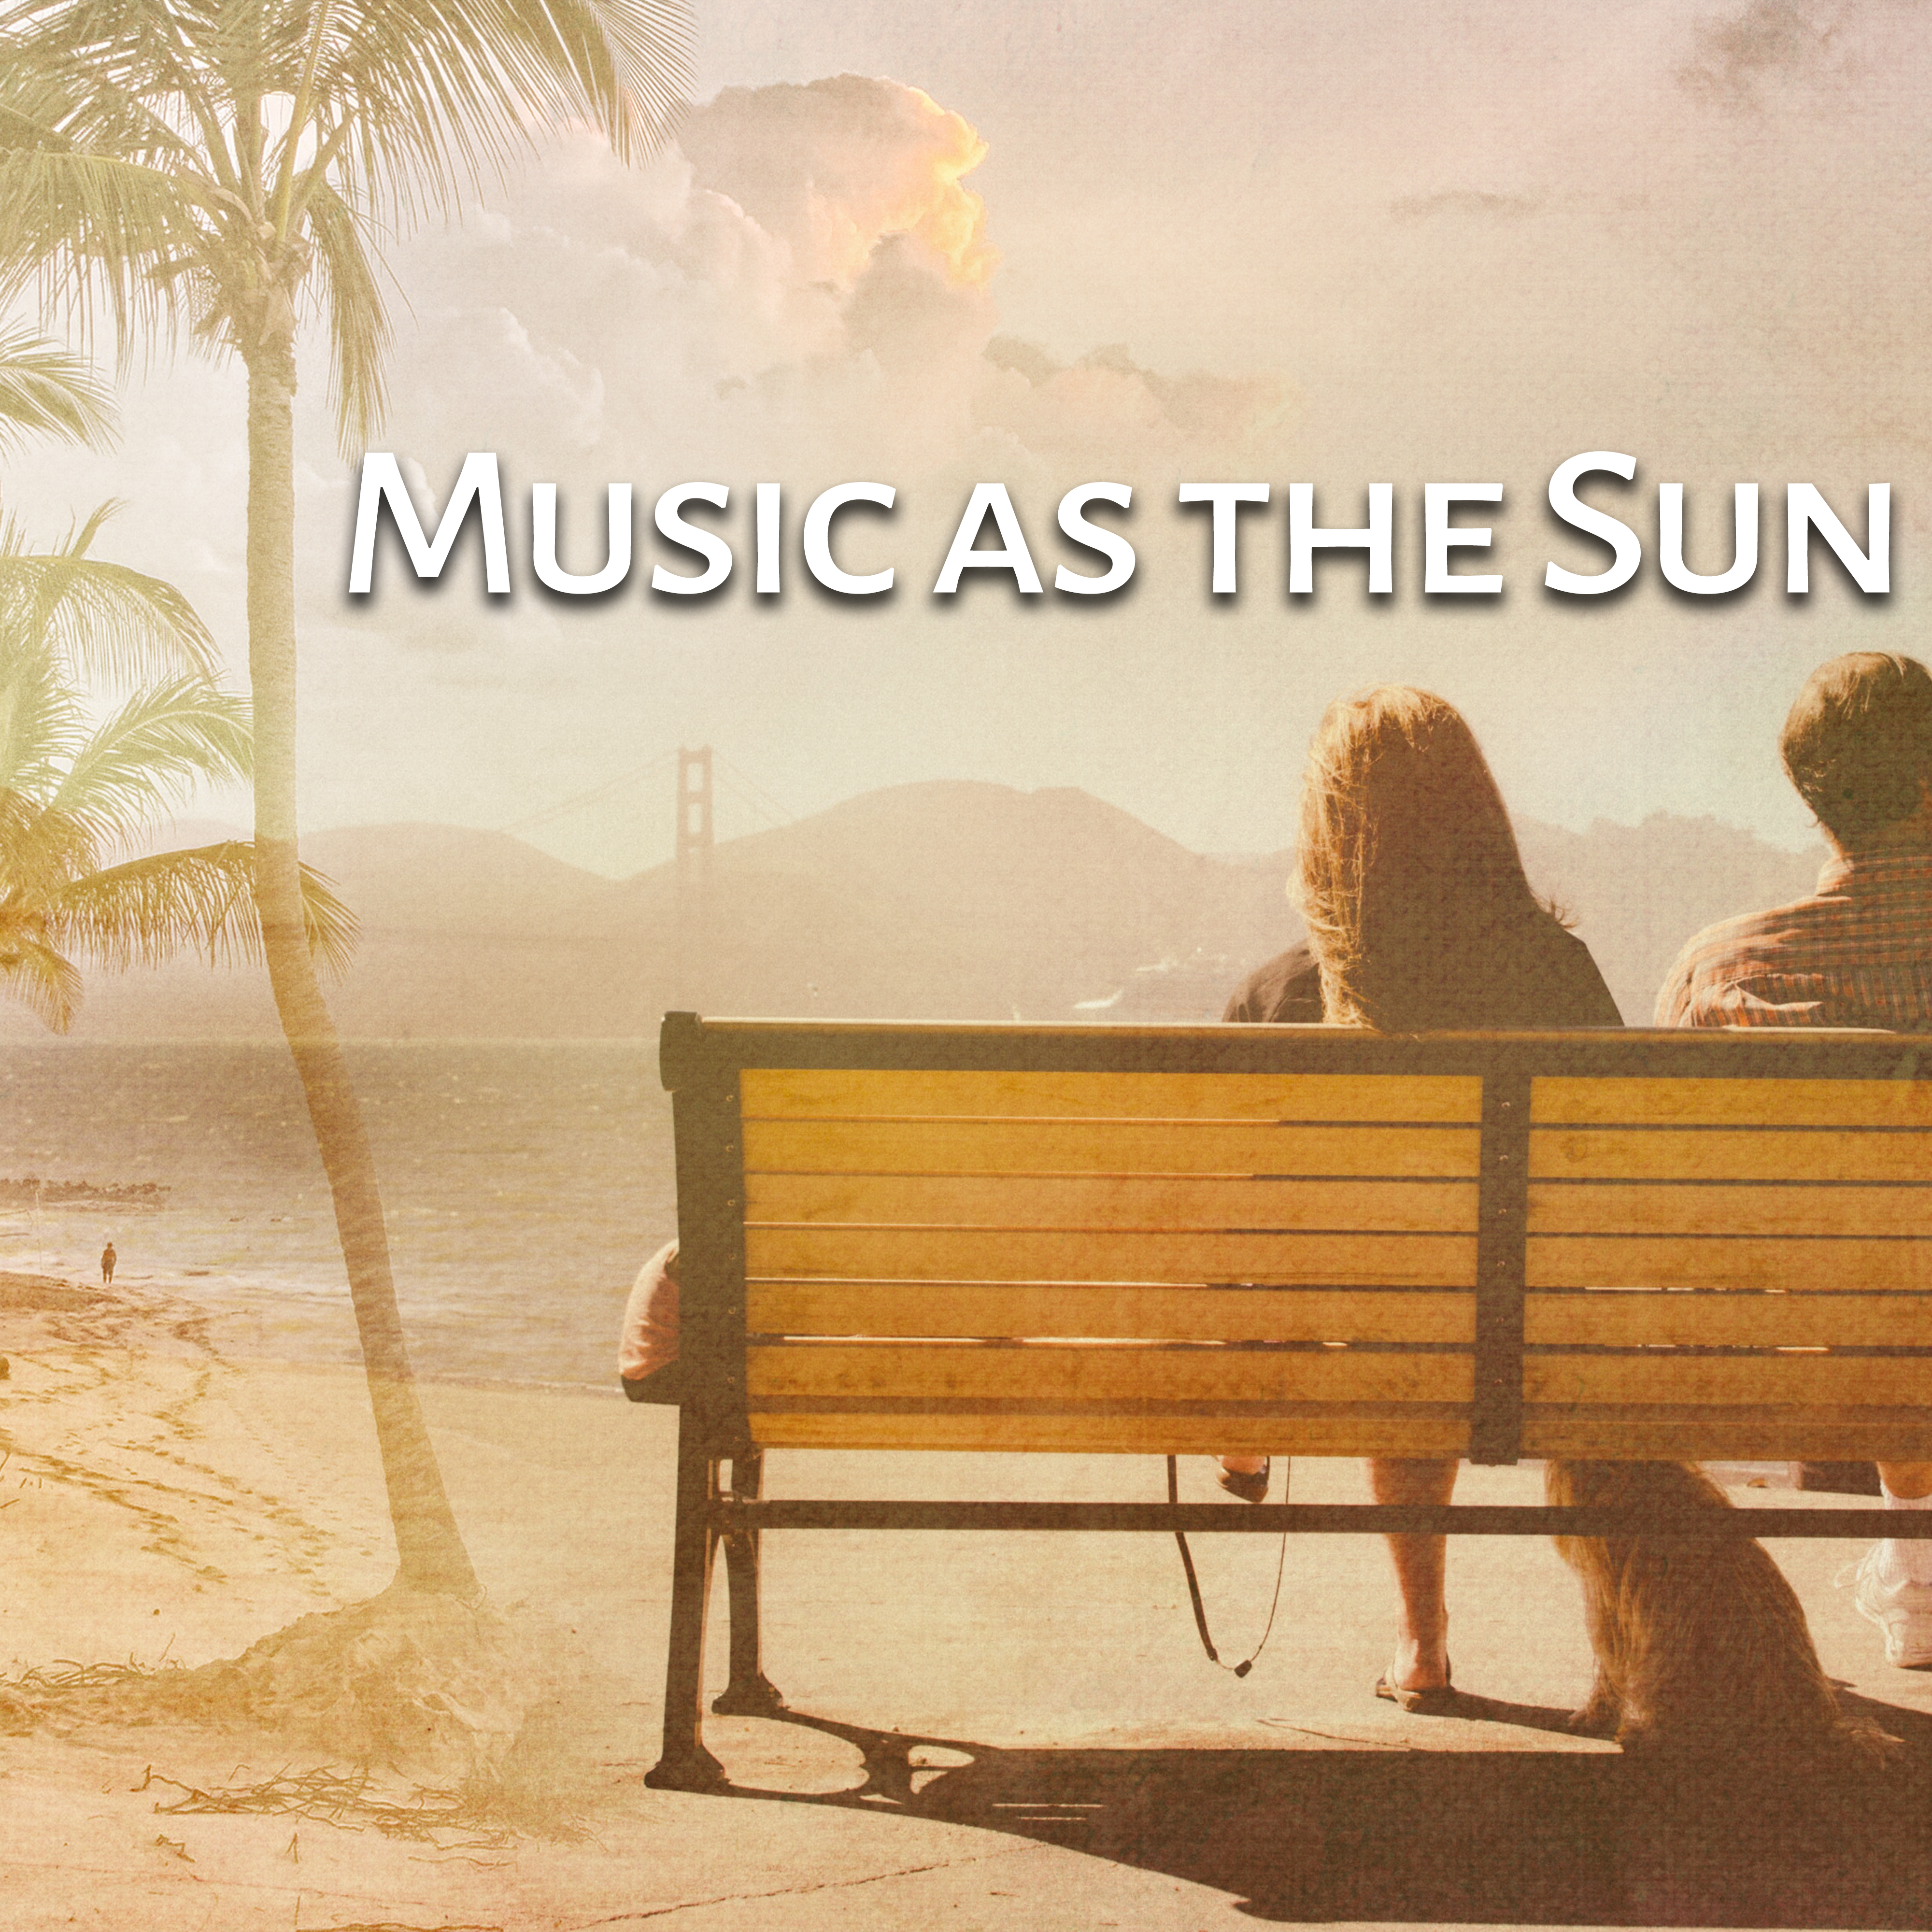 Music as the Sun - Summer Song, Solar Region, Sun Control, Gold Tint, Dancing is Fun